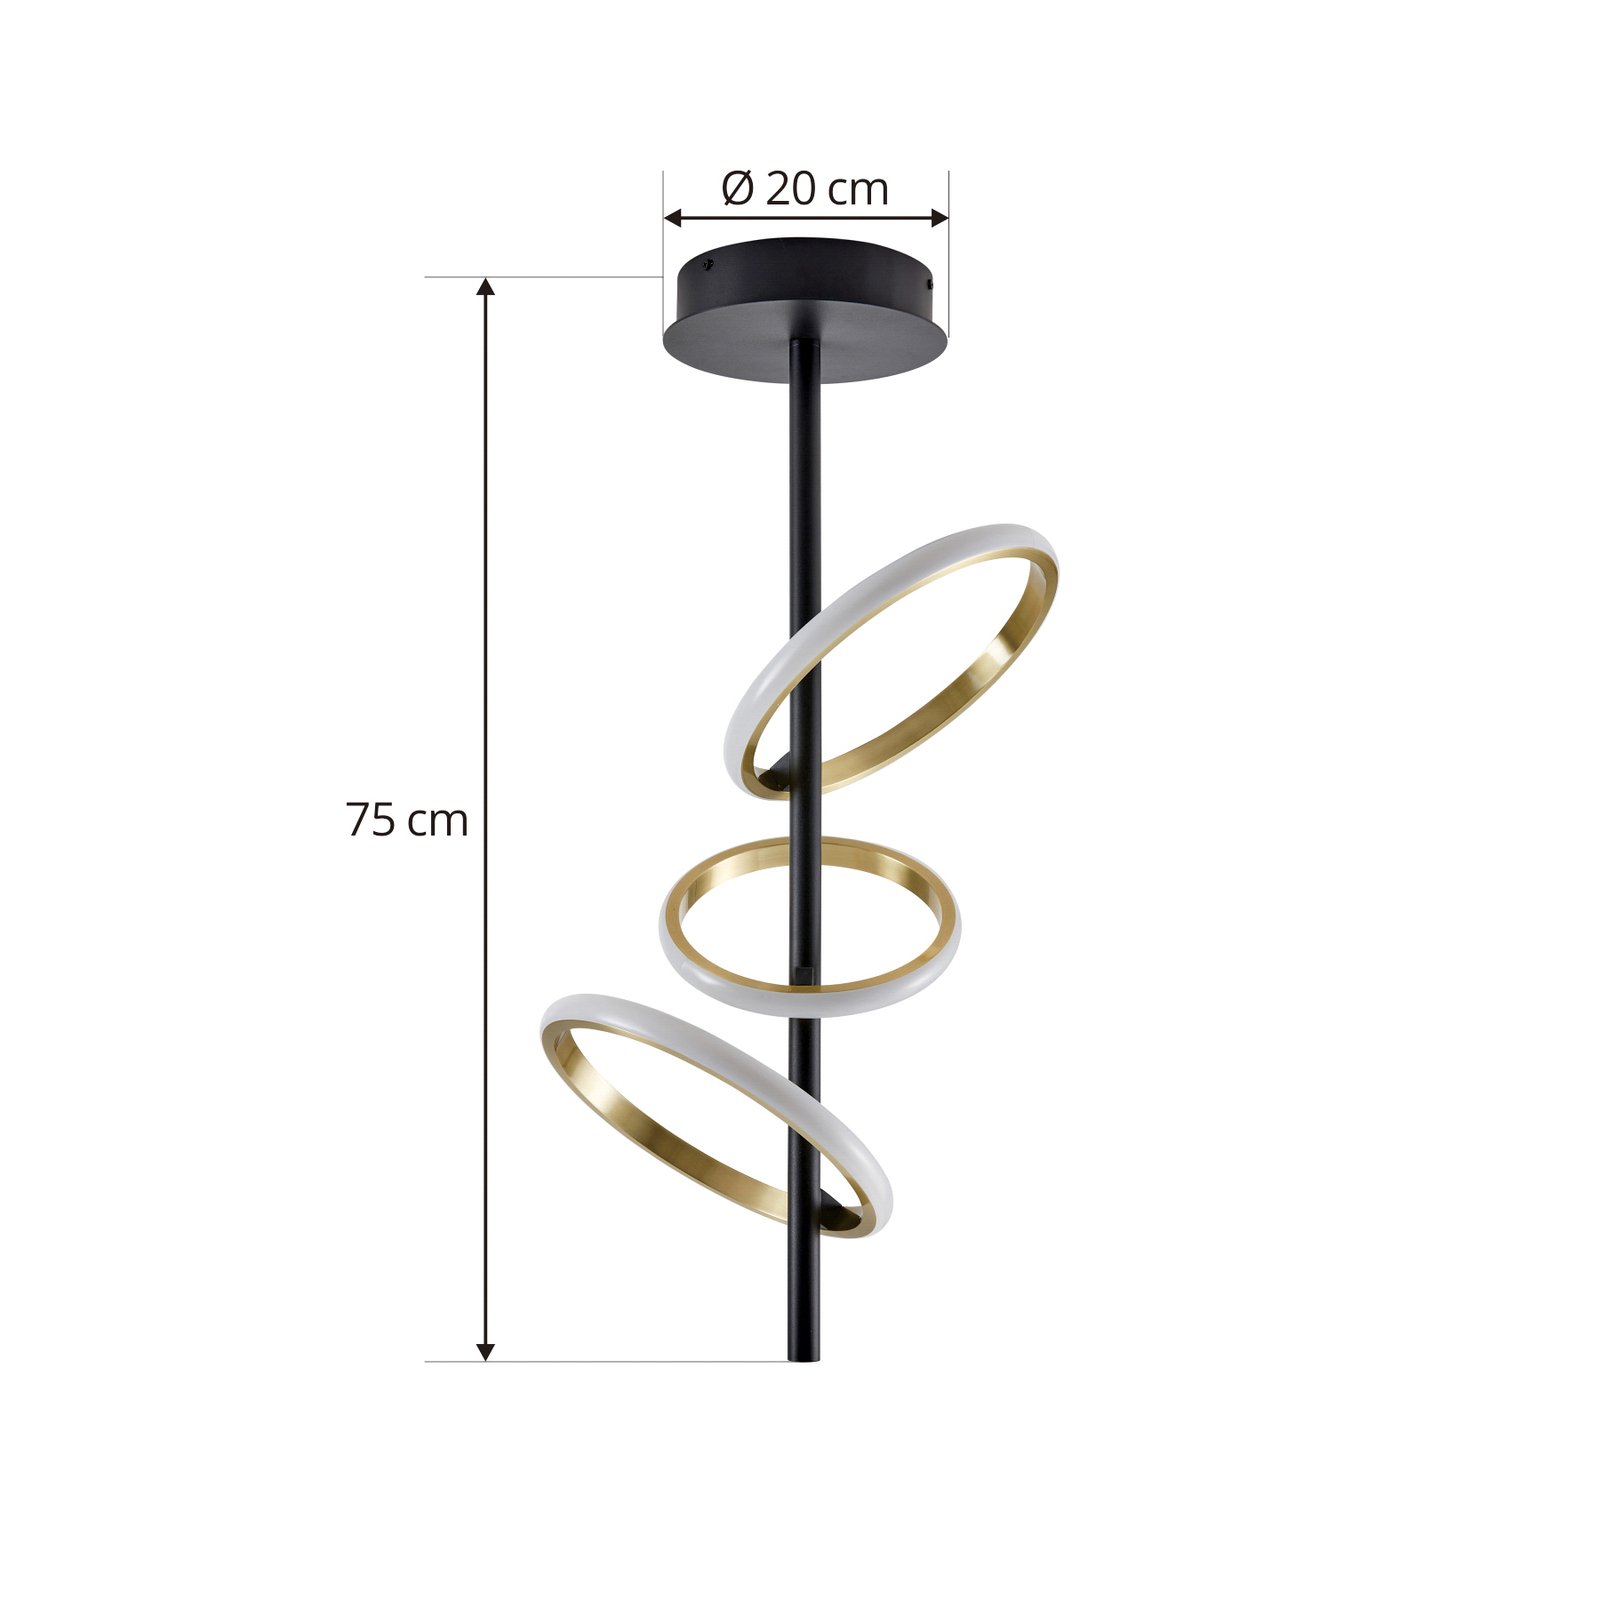 Lucande LED-kattovalaisin Madu, musta, metalli, 75 cm korkea